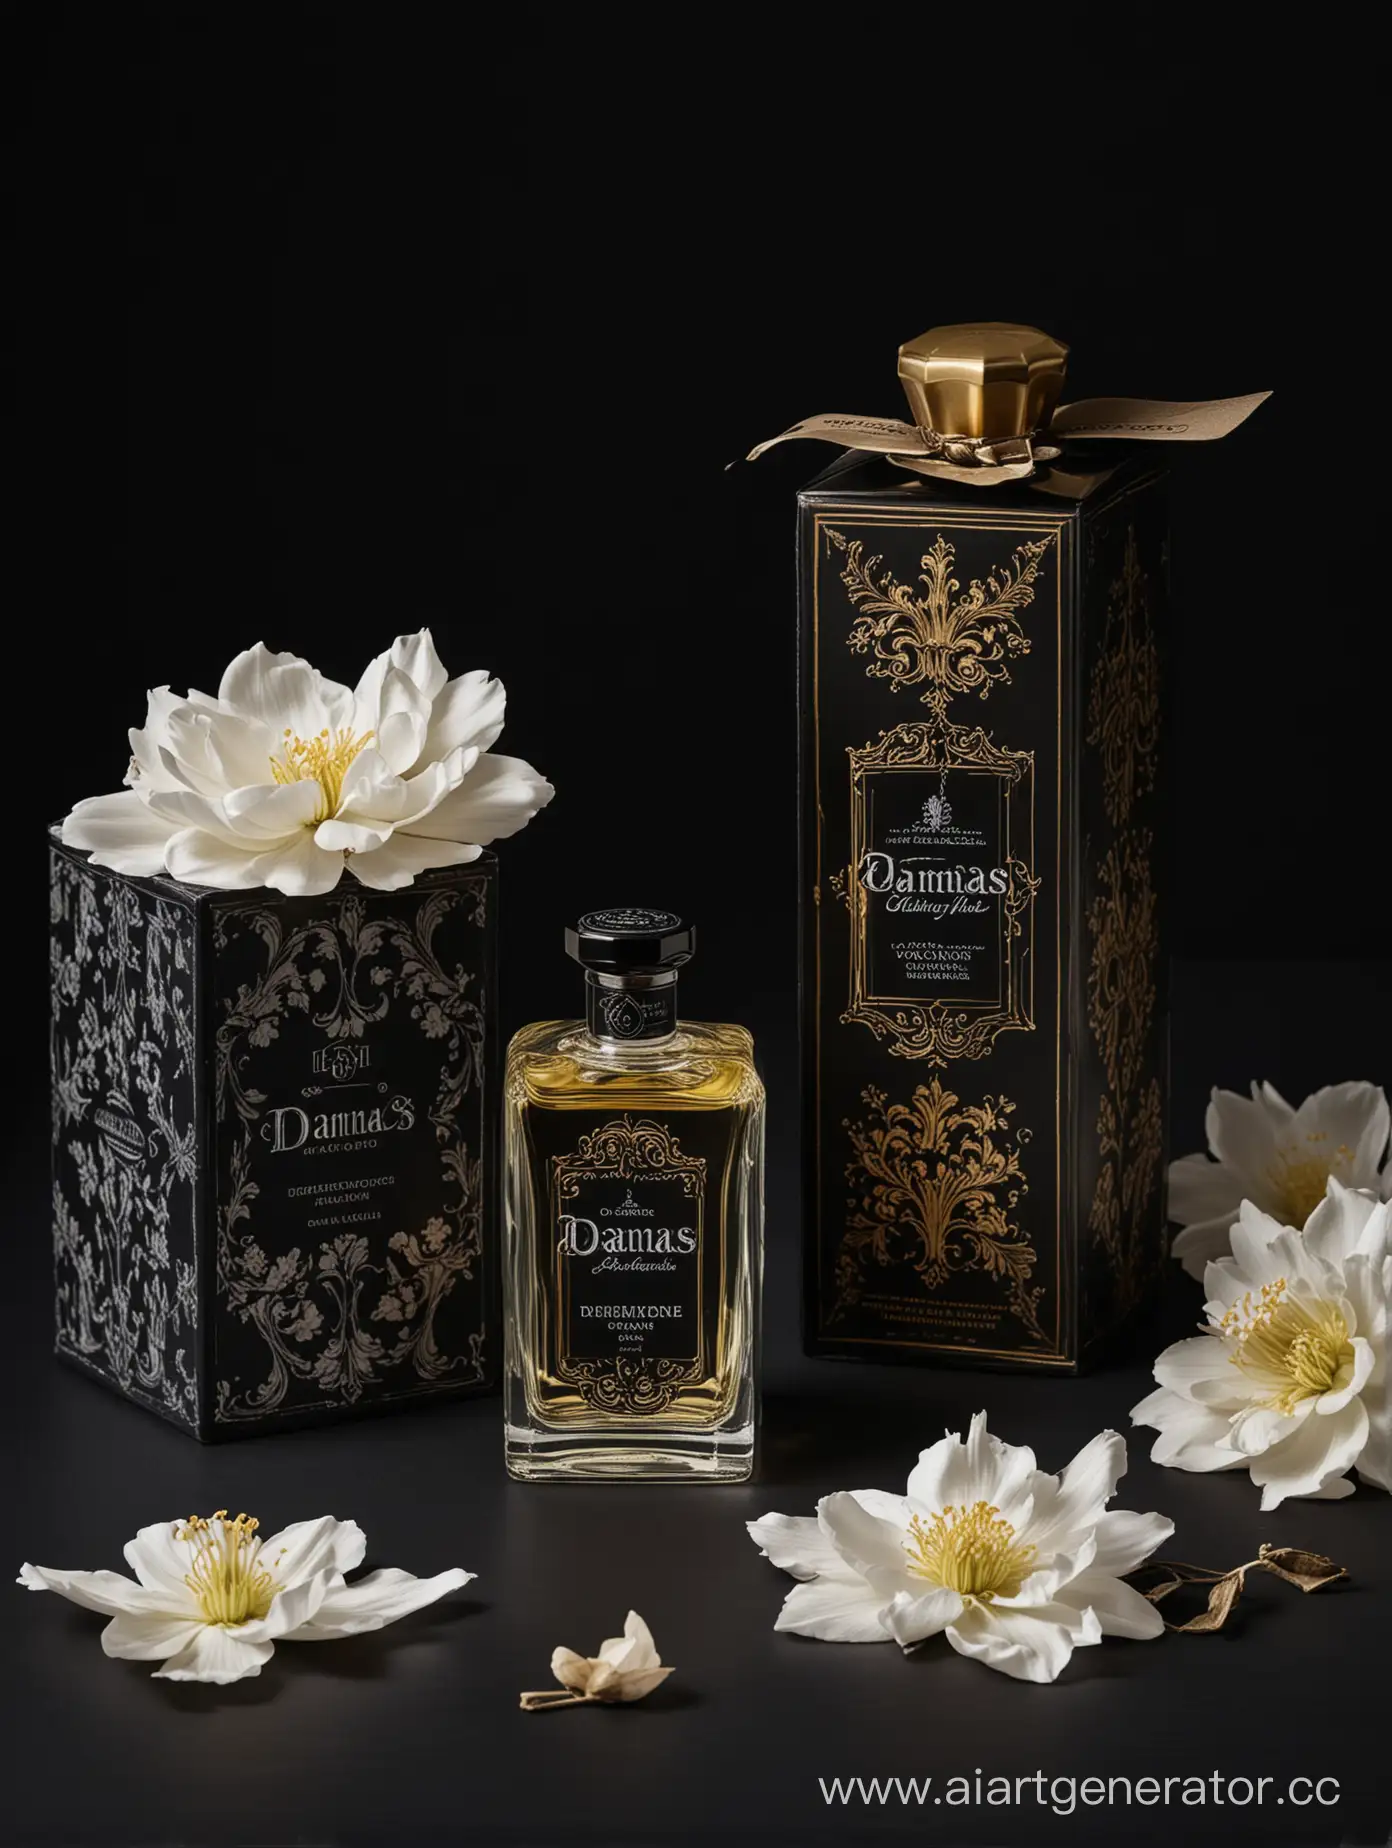 a bottle of damas cologne sitting next to a box, a flemish Baroque by Demetrios Farmakopoulos, instagram contest winner, dau-al-set, dynamic composition, contest winner, feminine
black background